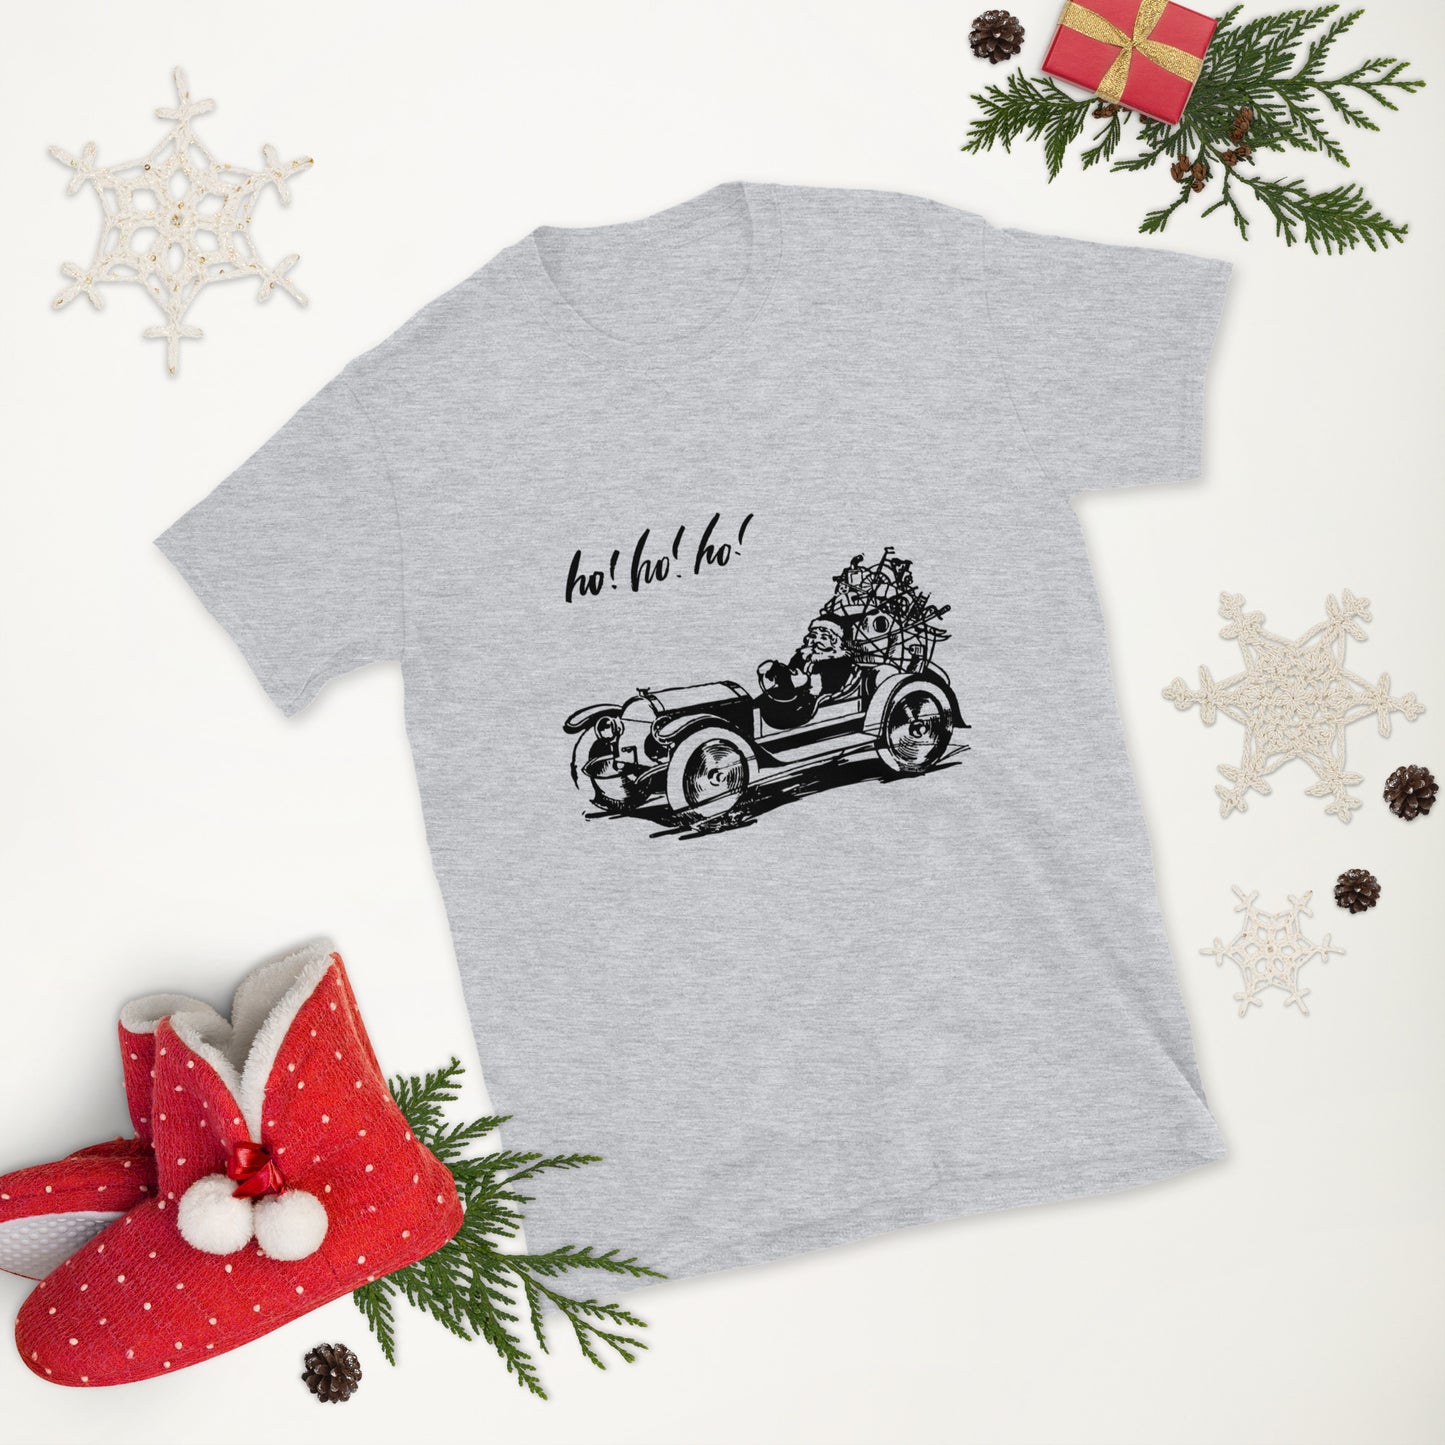 Ho! Ho! Ho! Christmas Short-Sleeve Unisex T-Shirt, Motorized Santa, Santa in a Car